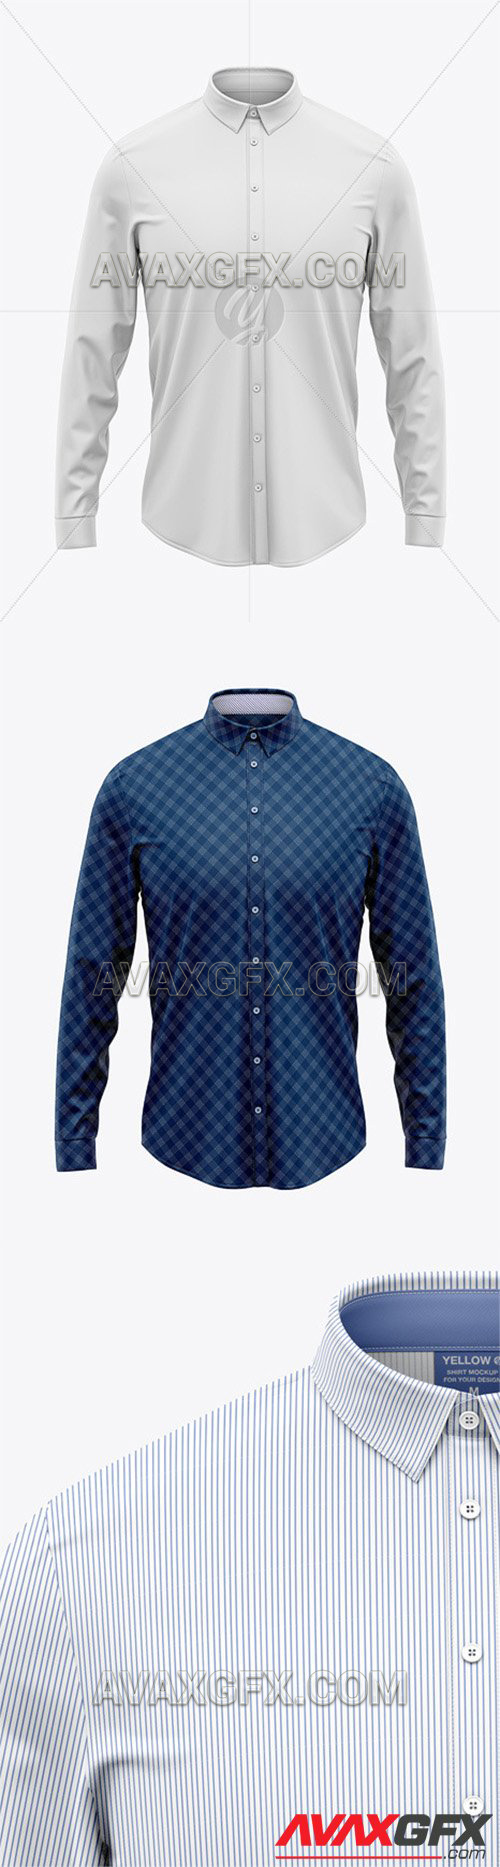 Men's Long Sleeve Button Down Dress Shirt - Front View 60331